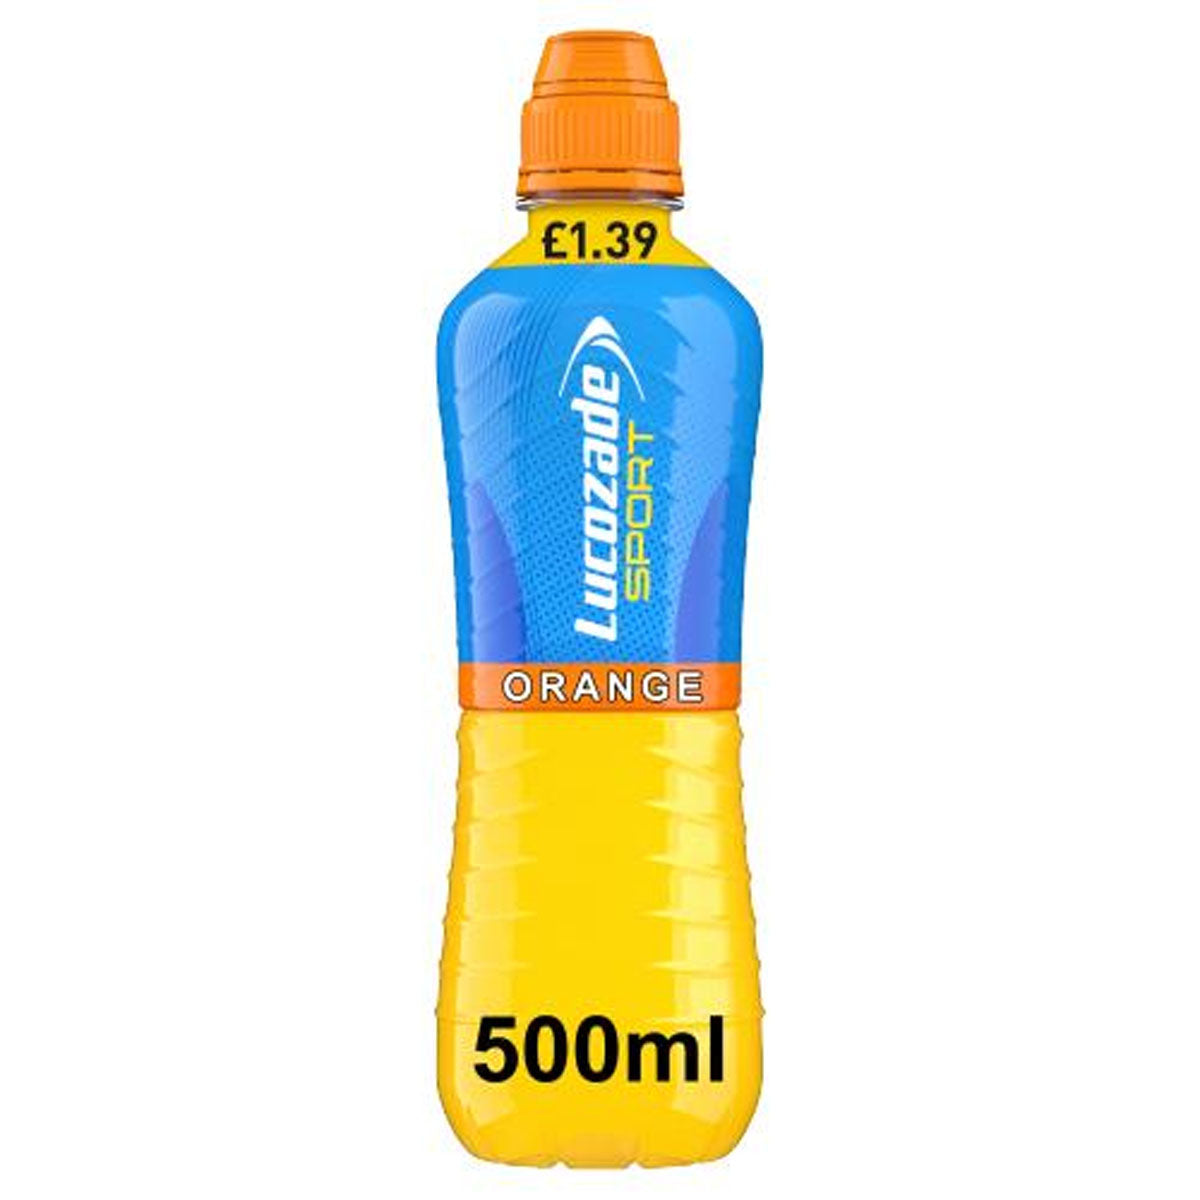 A bottle of Lucozade - Sport Drink Orange - 500ml on a white background.